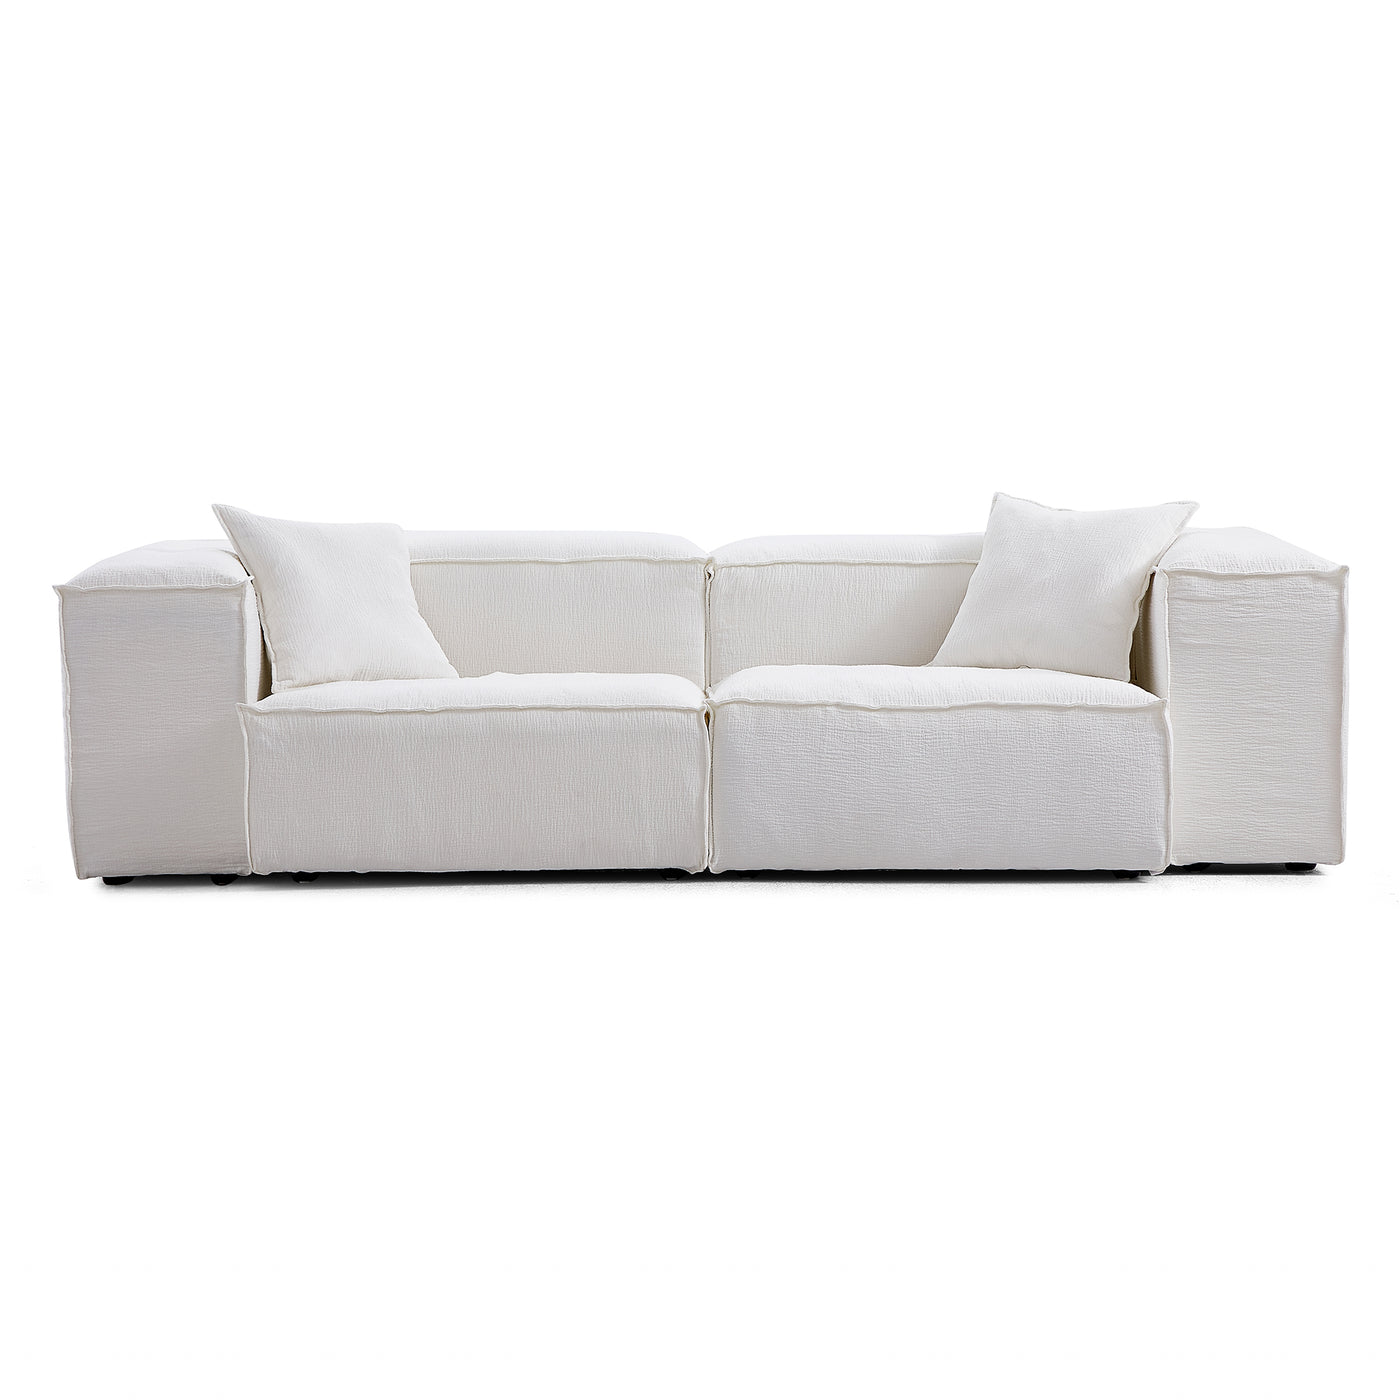 Freedom Modular Khaki Sofa-White-High-106.3